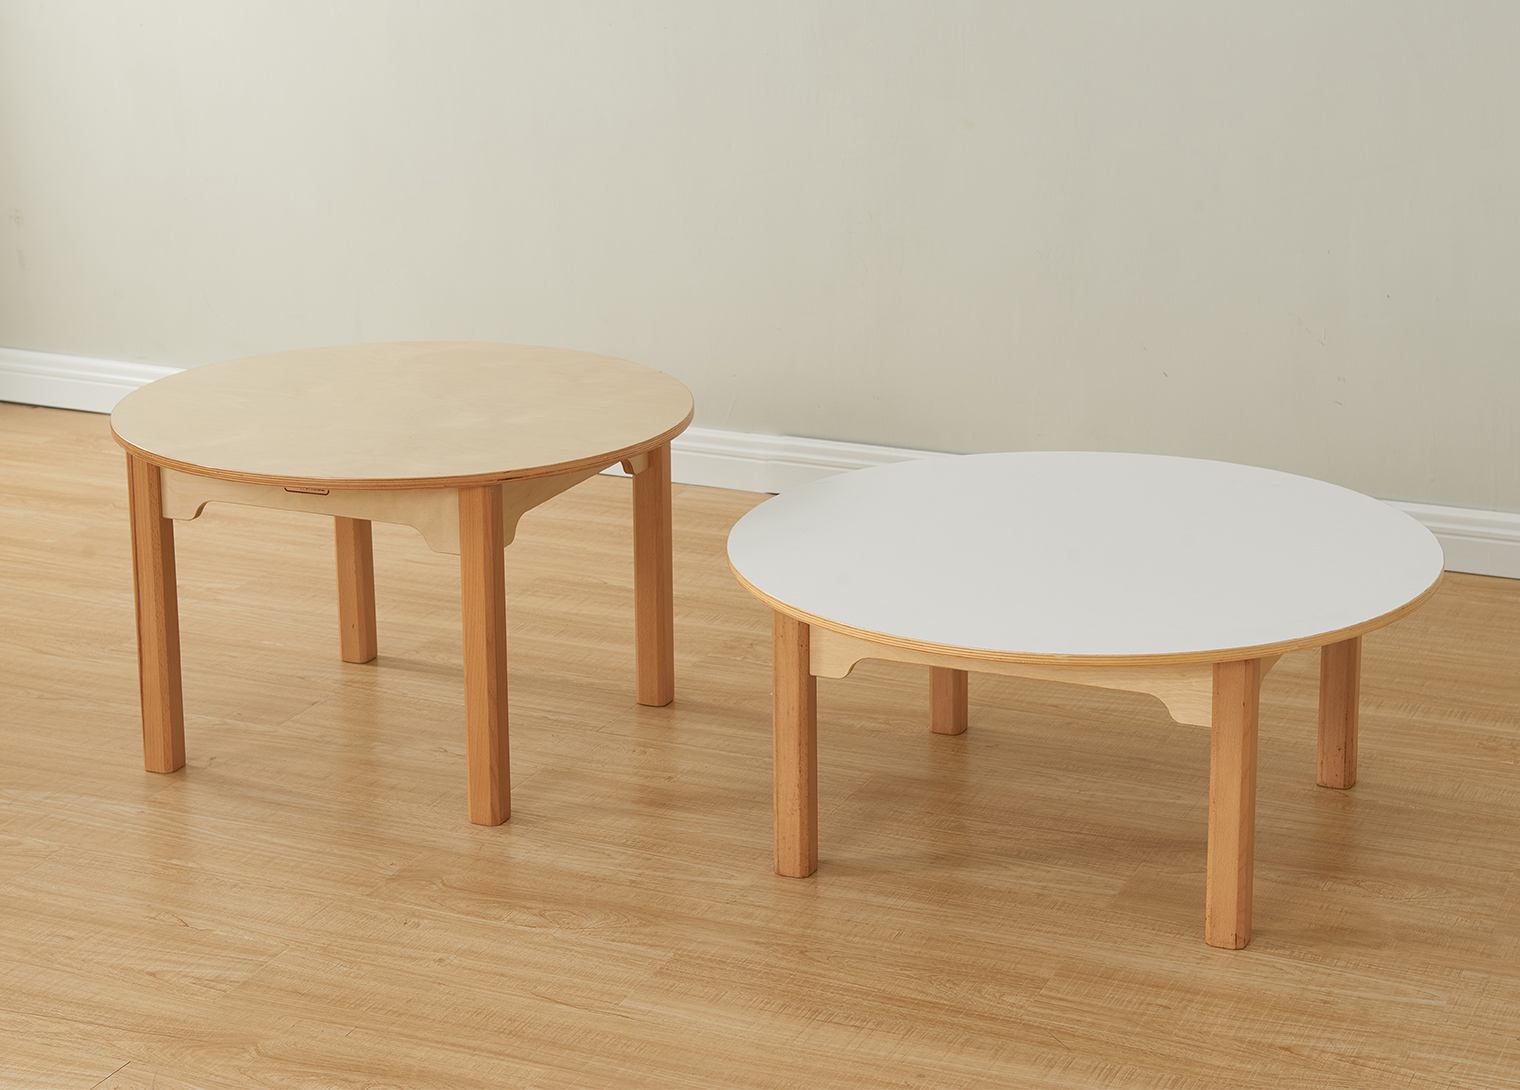 Inga Design Kids - 535H Circular Table (Clear Varnish)